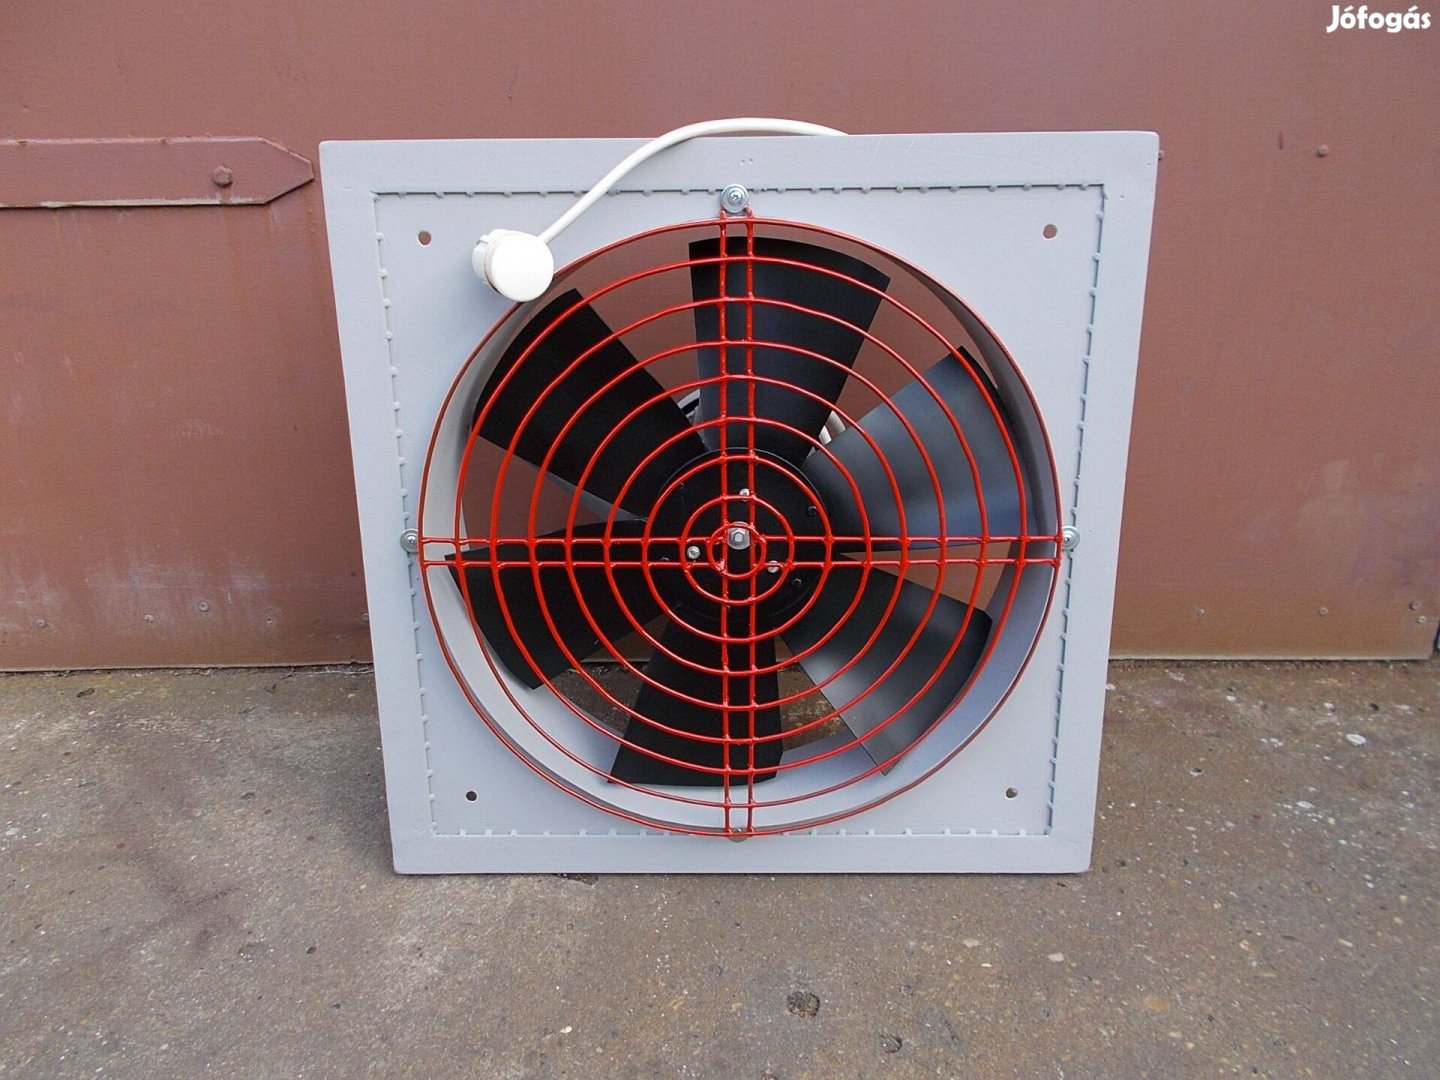 40,9 cm-es felújított ipari ventilátor 220V-130W-1400f villanymotorral